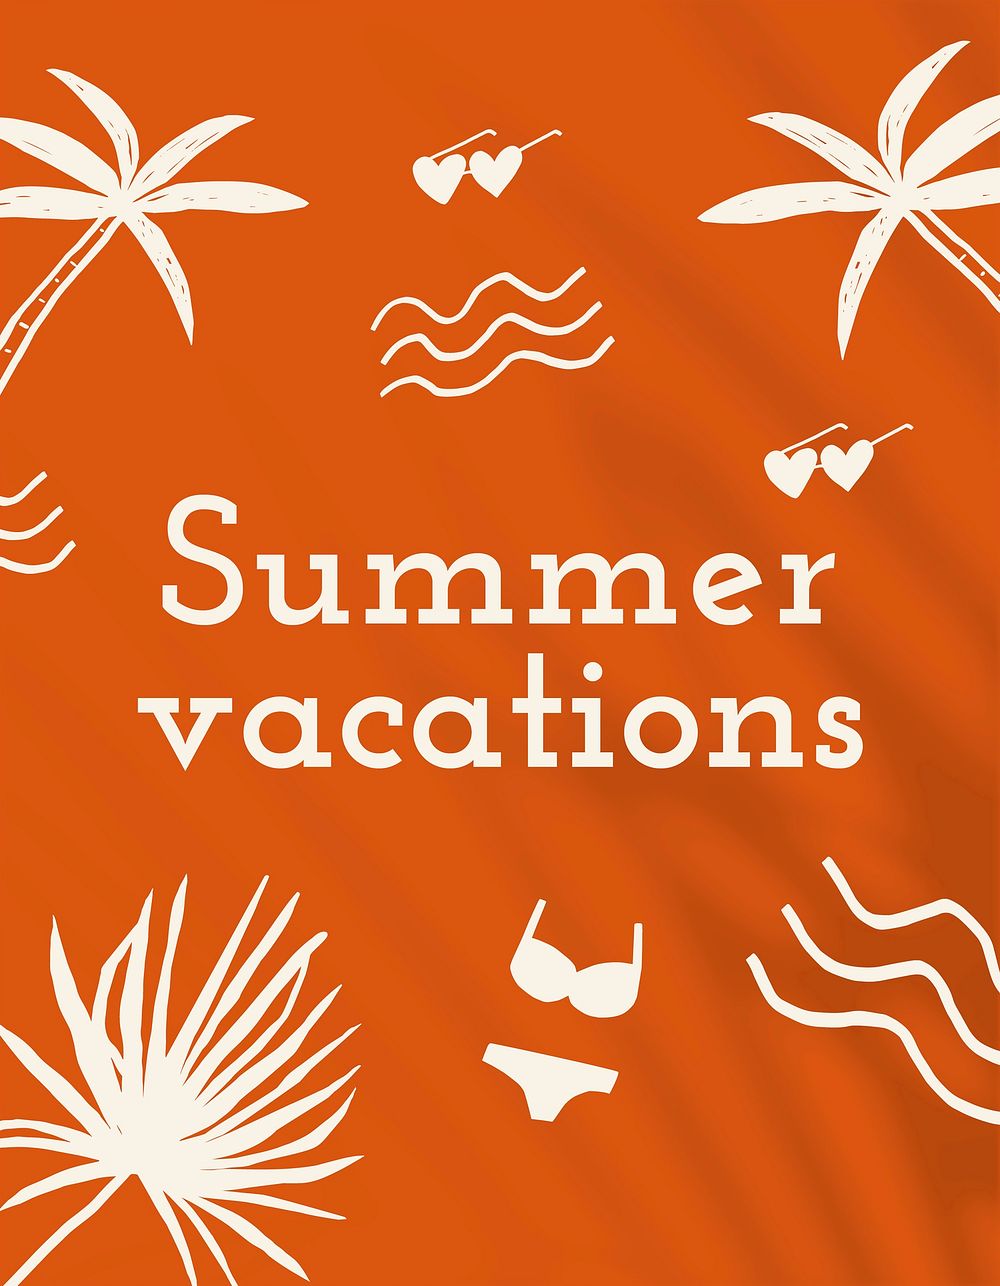 Summer vacation editable template vector in orange social media banner